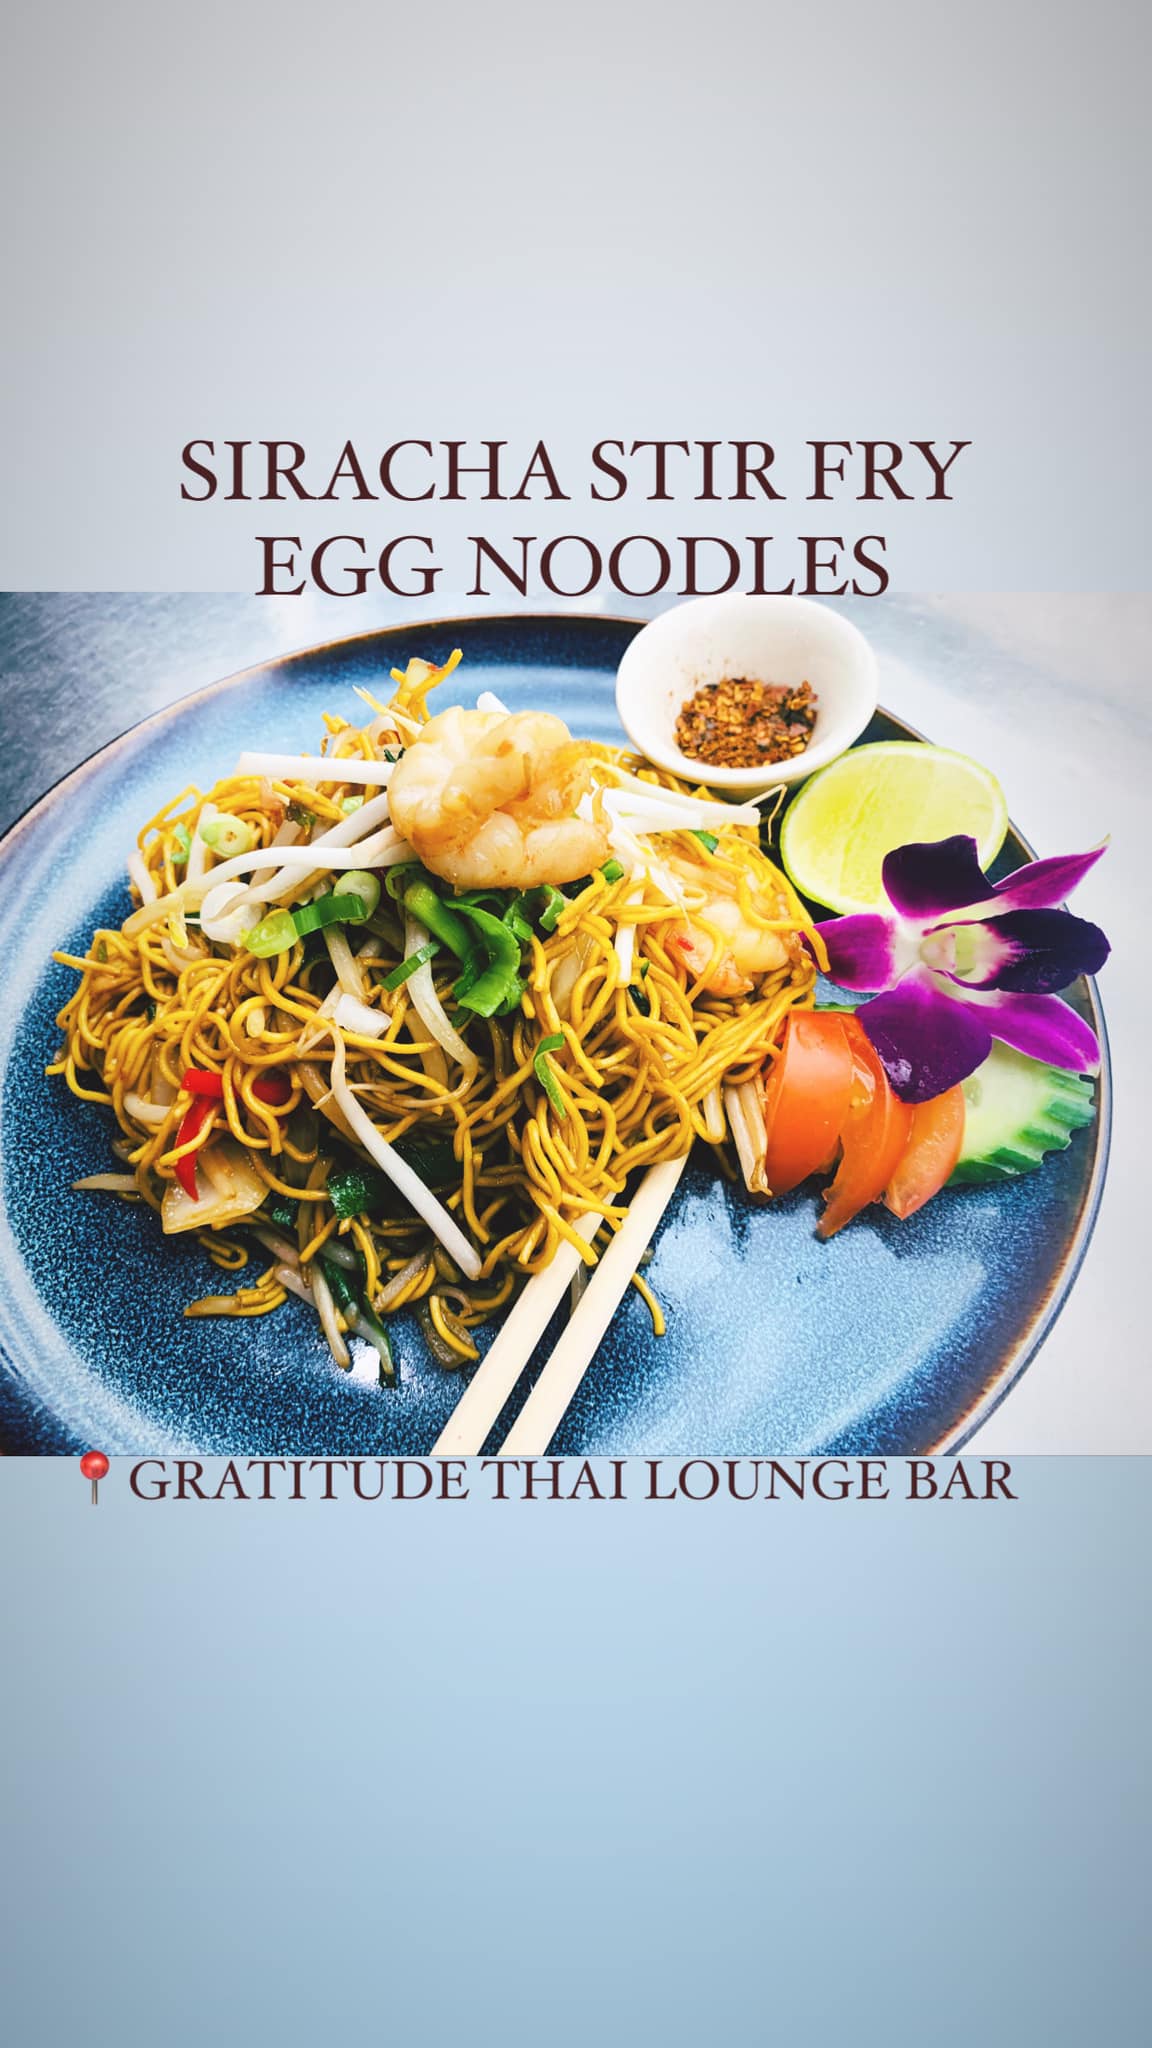 Gratitude Thai Lounge Bar